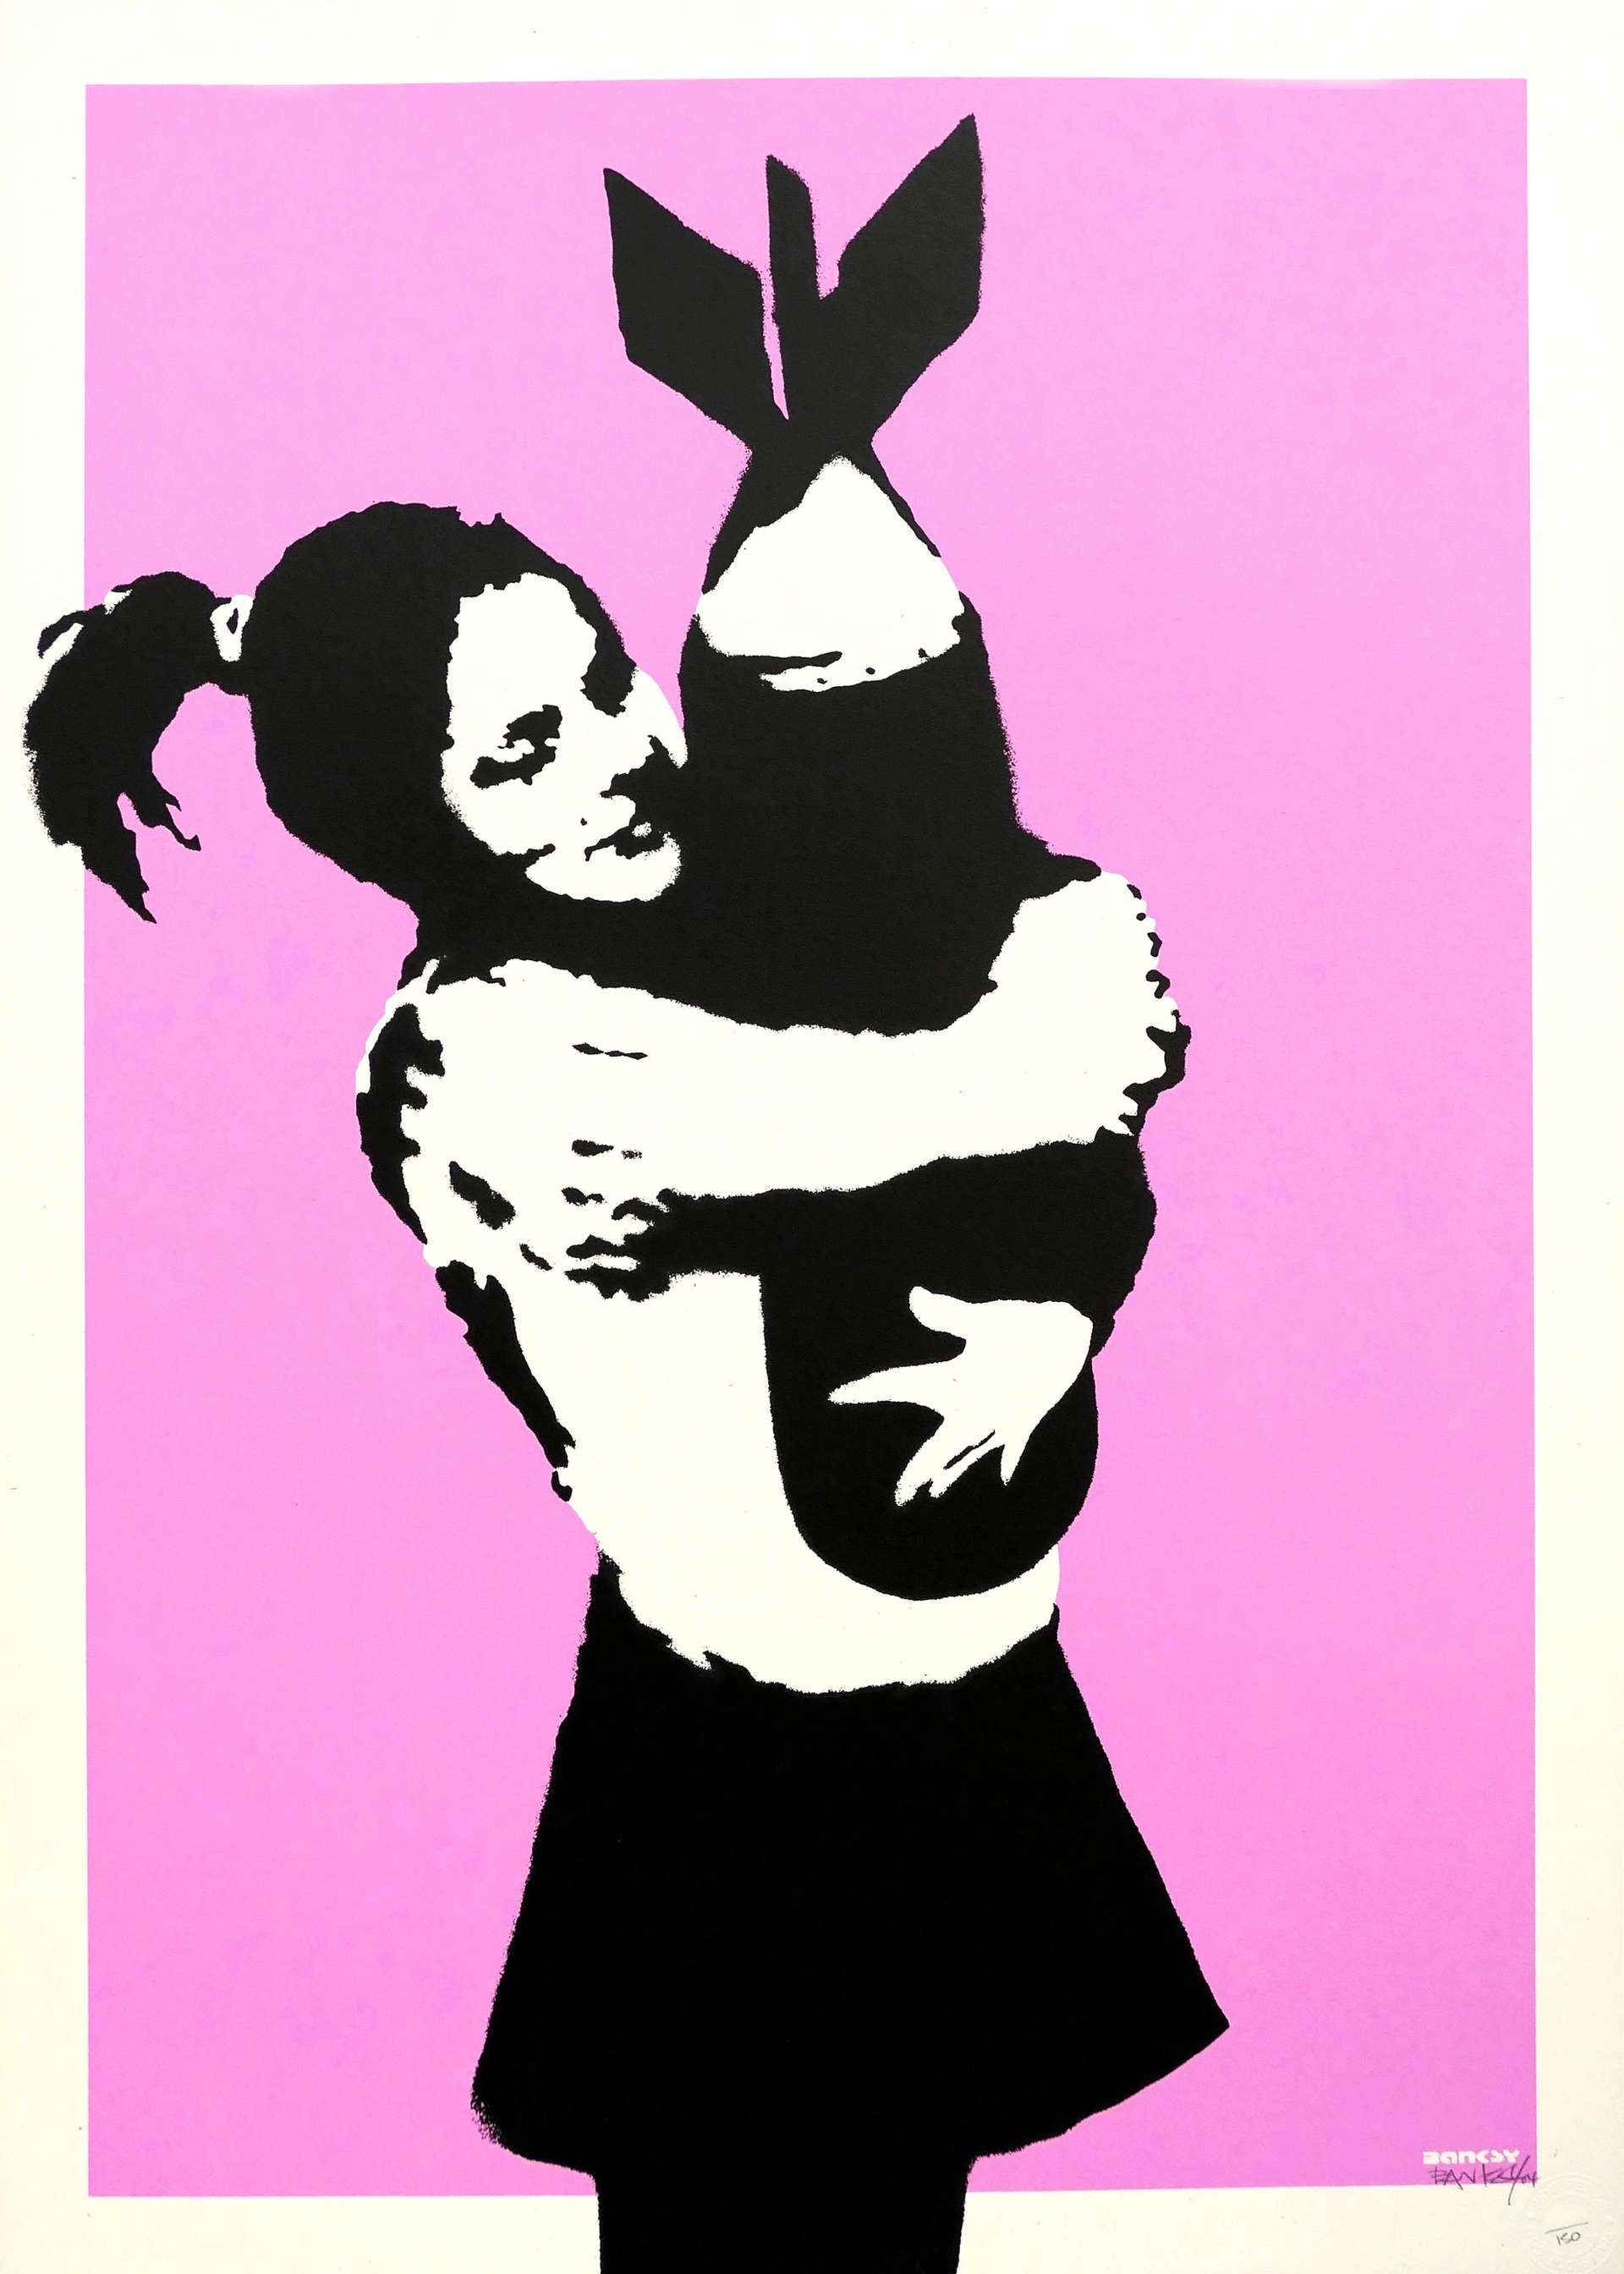 Bomb Hugger (Bomb Love) by Banksy